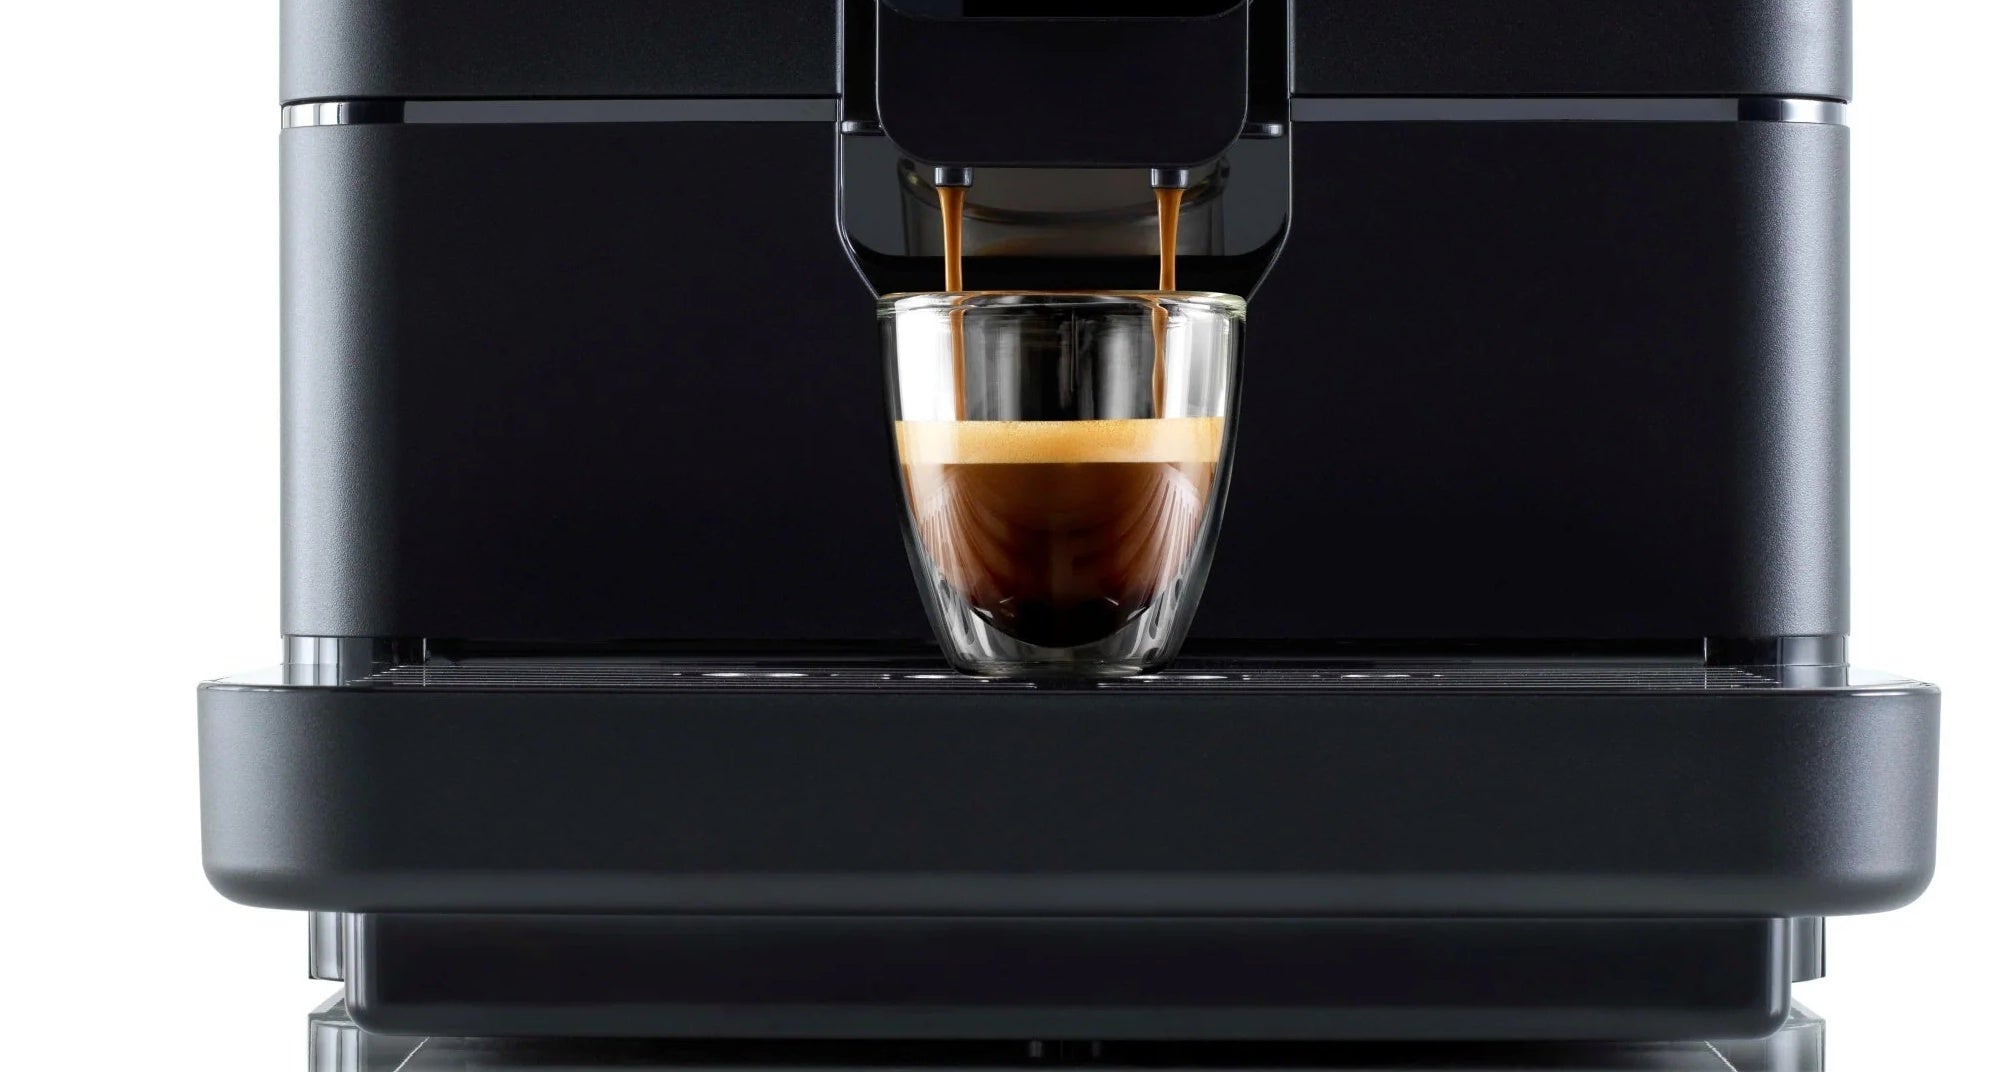 How to Use the New Saeco Royal OTC Super Automatic Espresso Machine